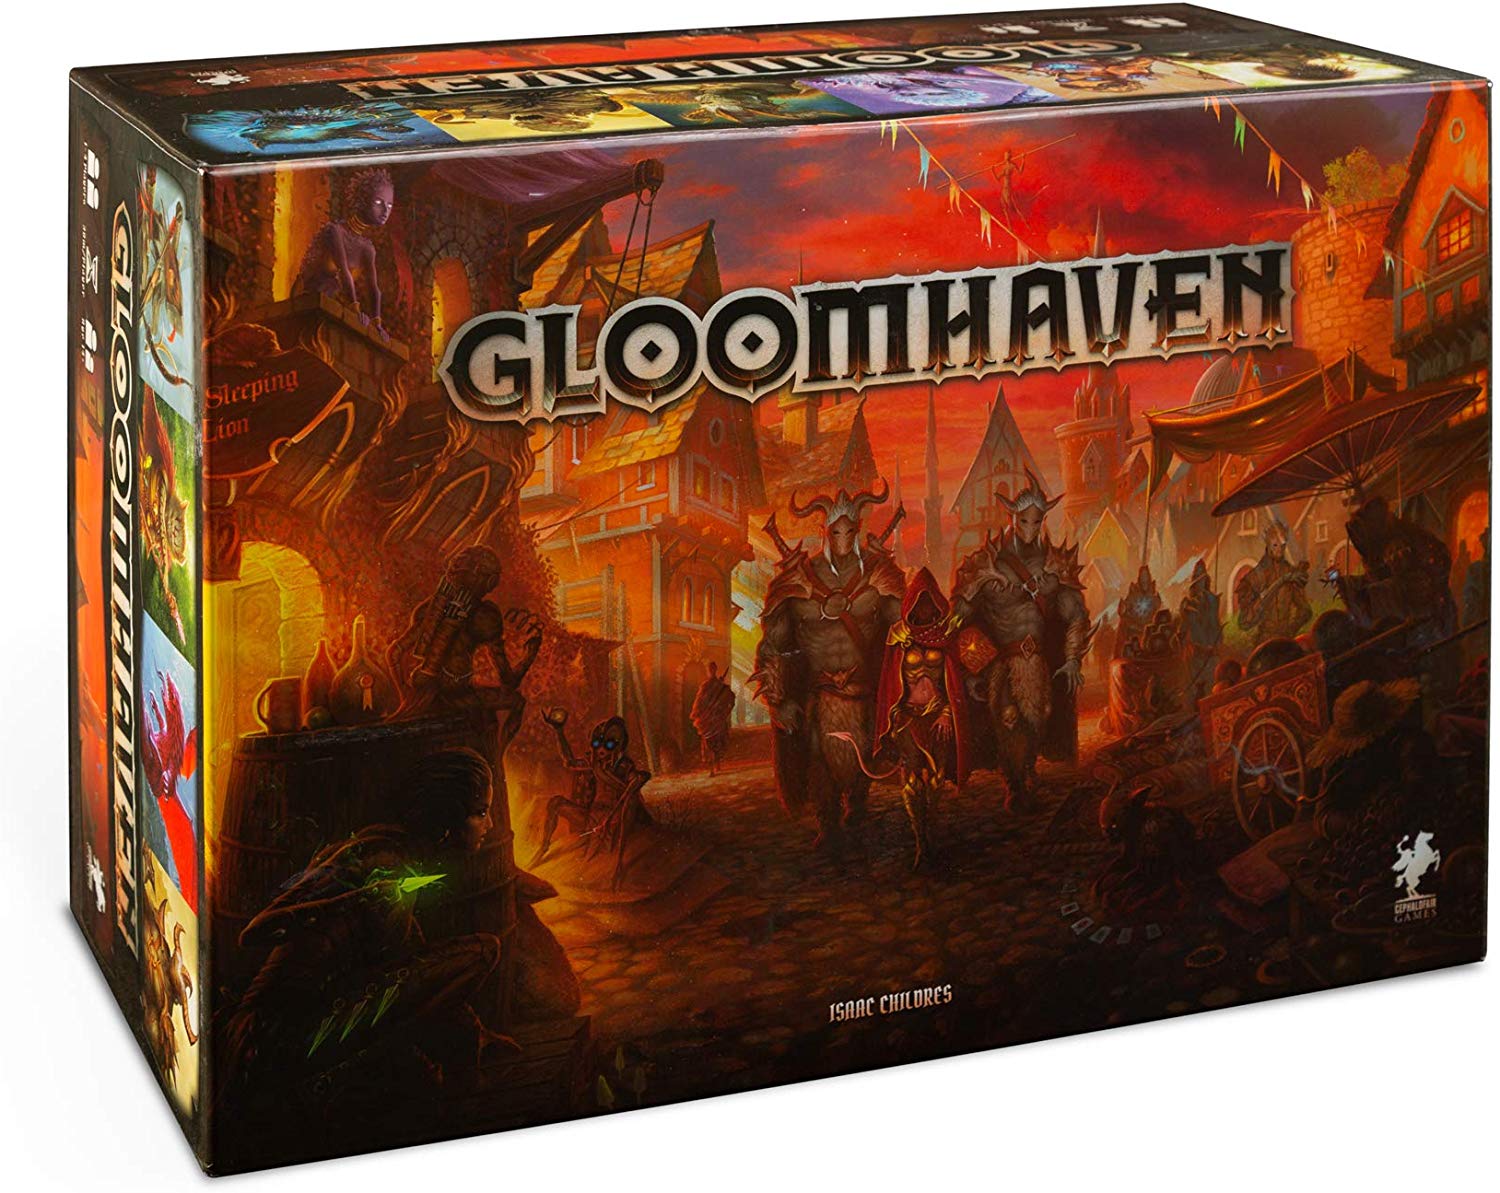 Gloomhaven free